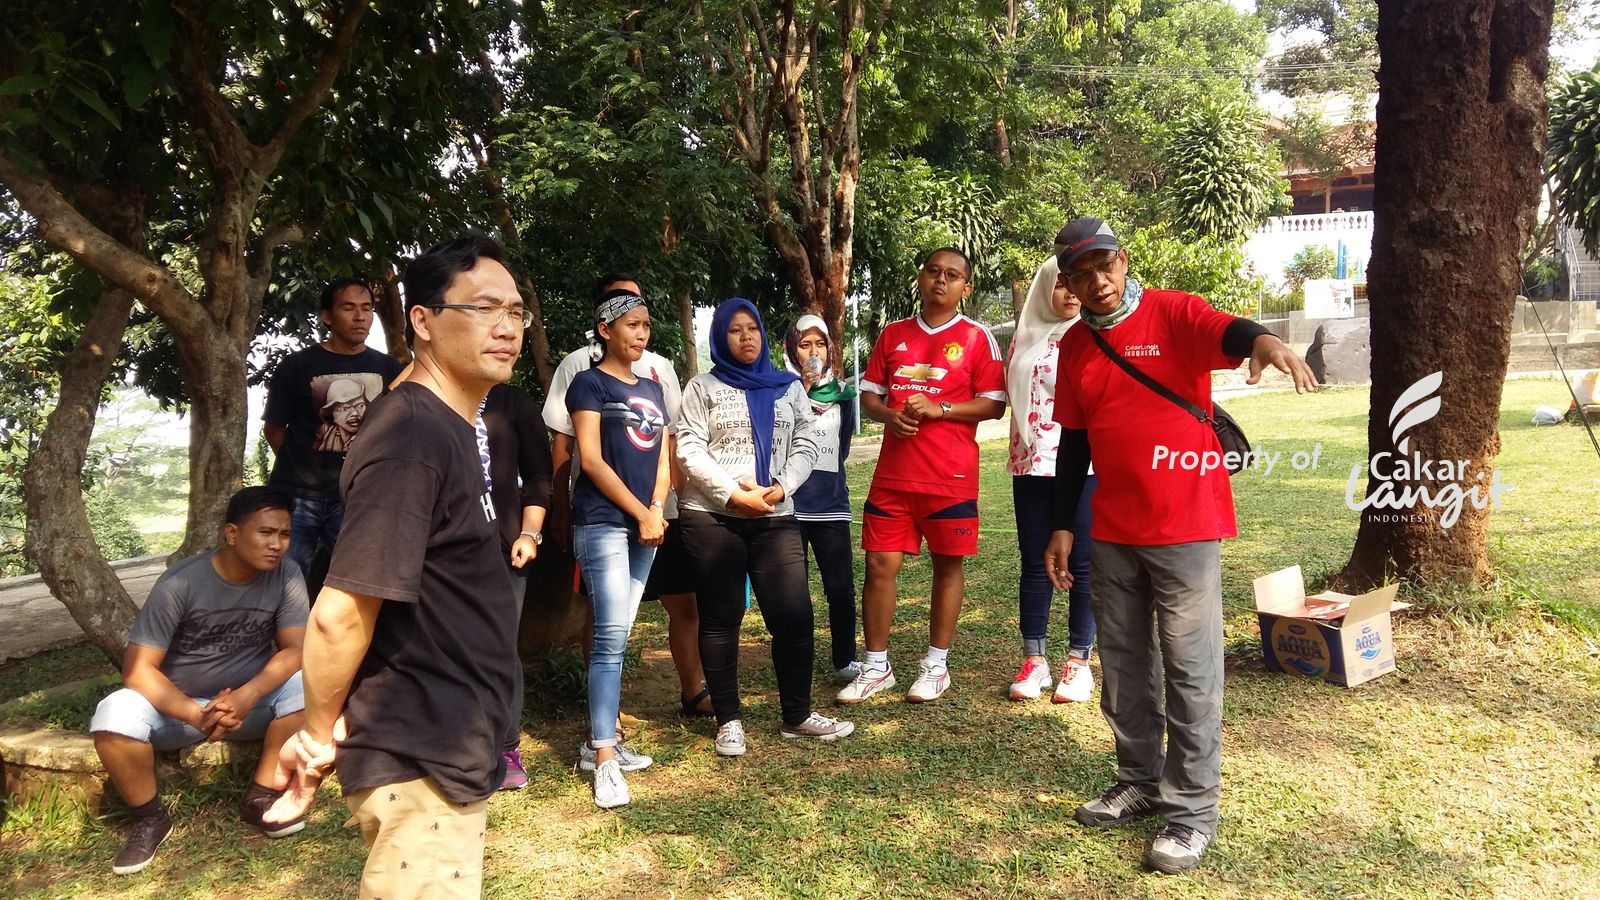 Lokasi untuk Kegiatan Outbound Training Orchid Forest Cikole Bandung